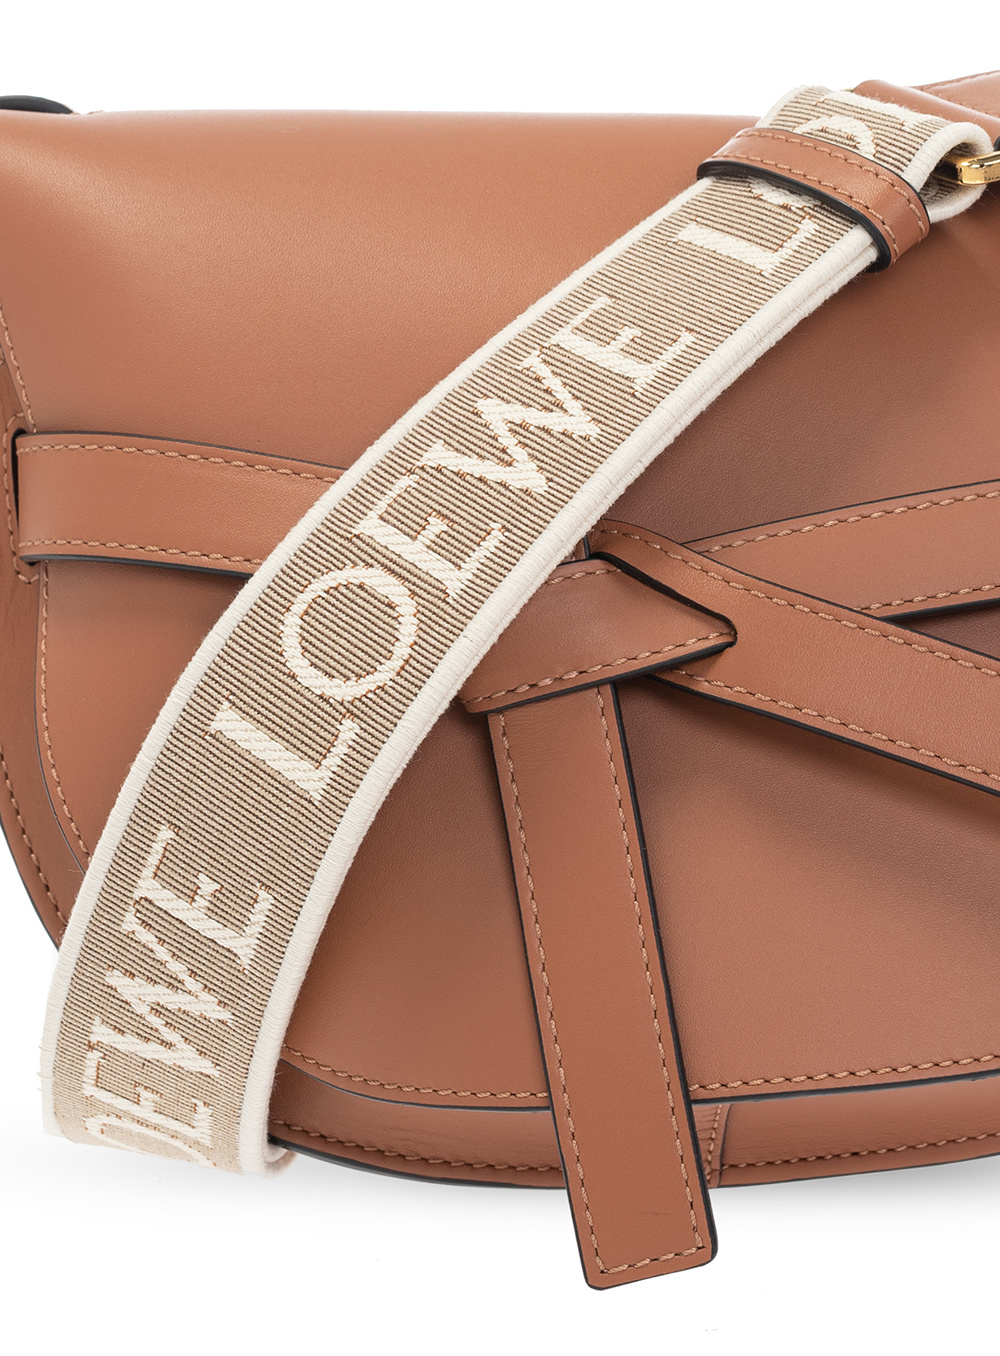 Brand New Loewe Bucket Gate shoulder bag in gold calfskin